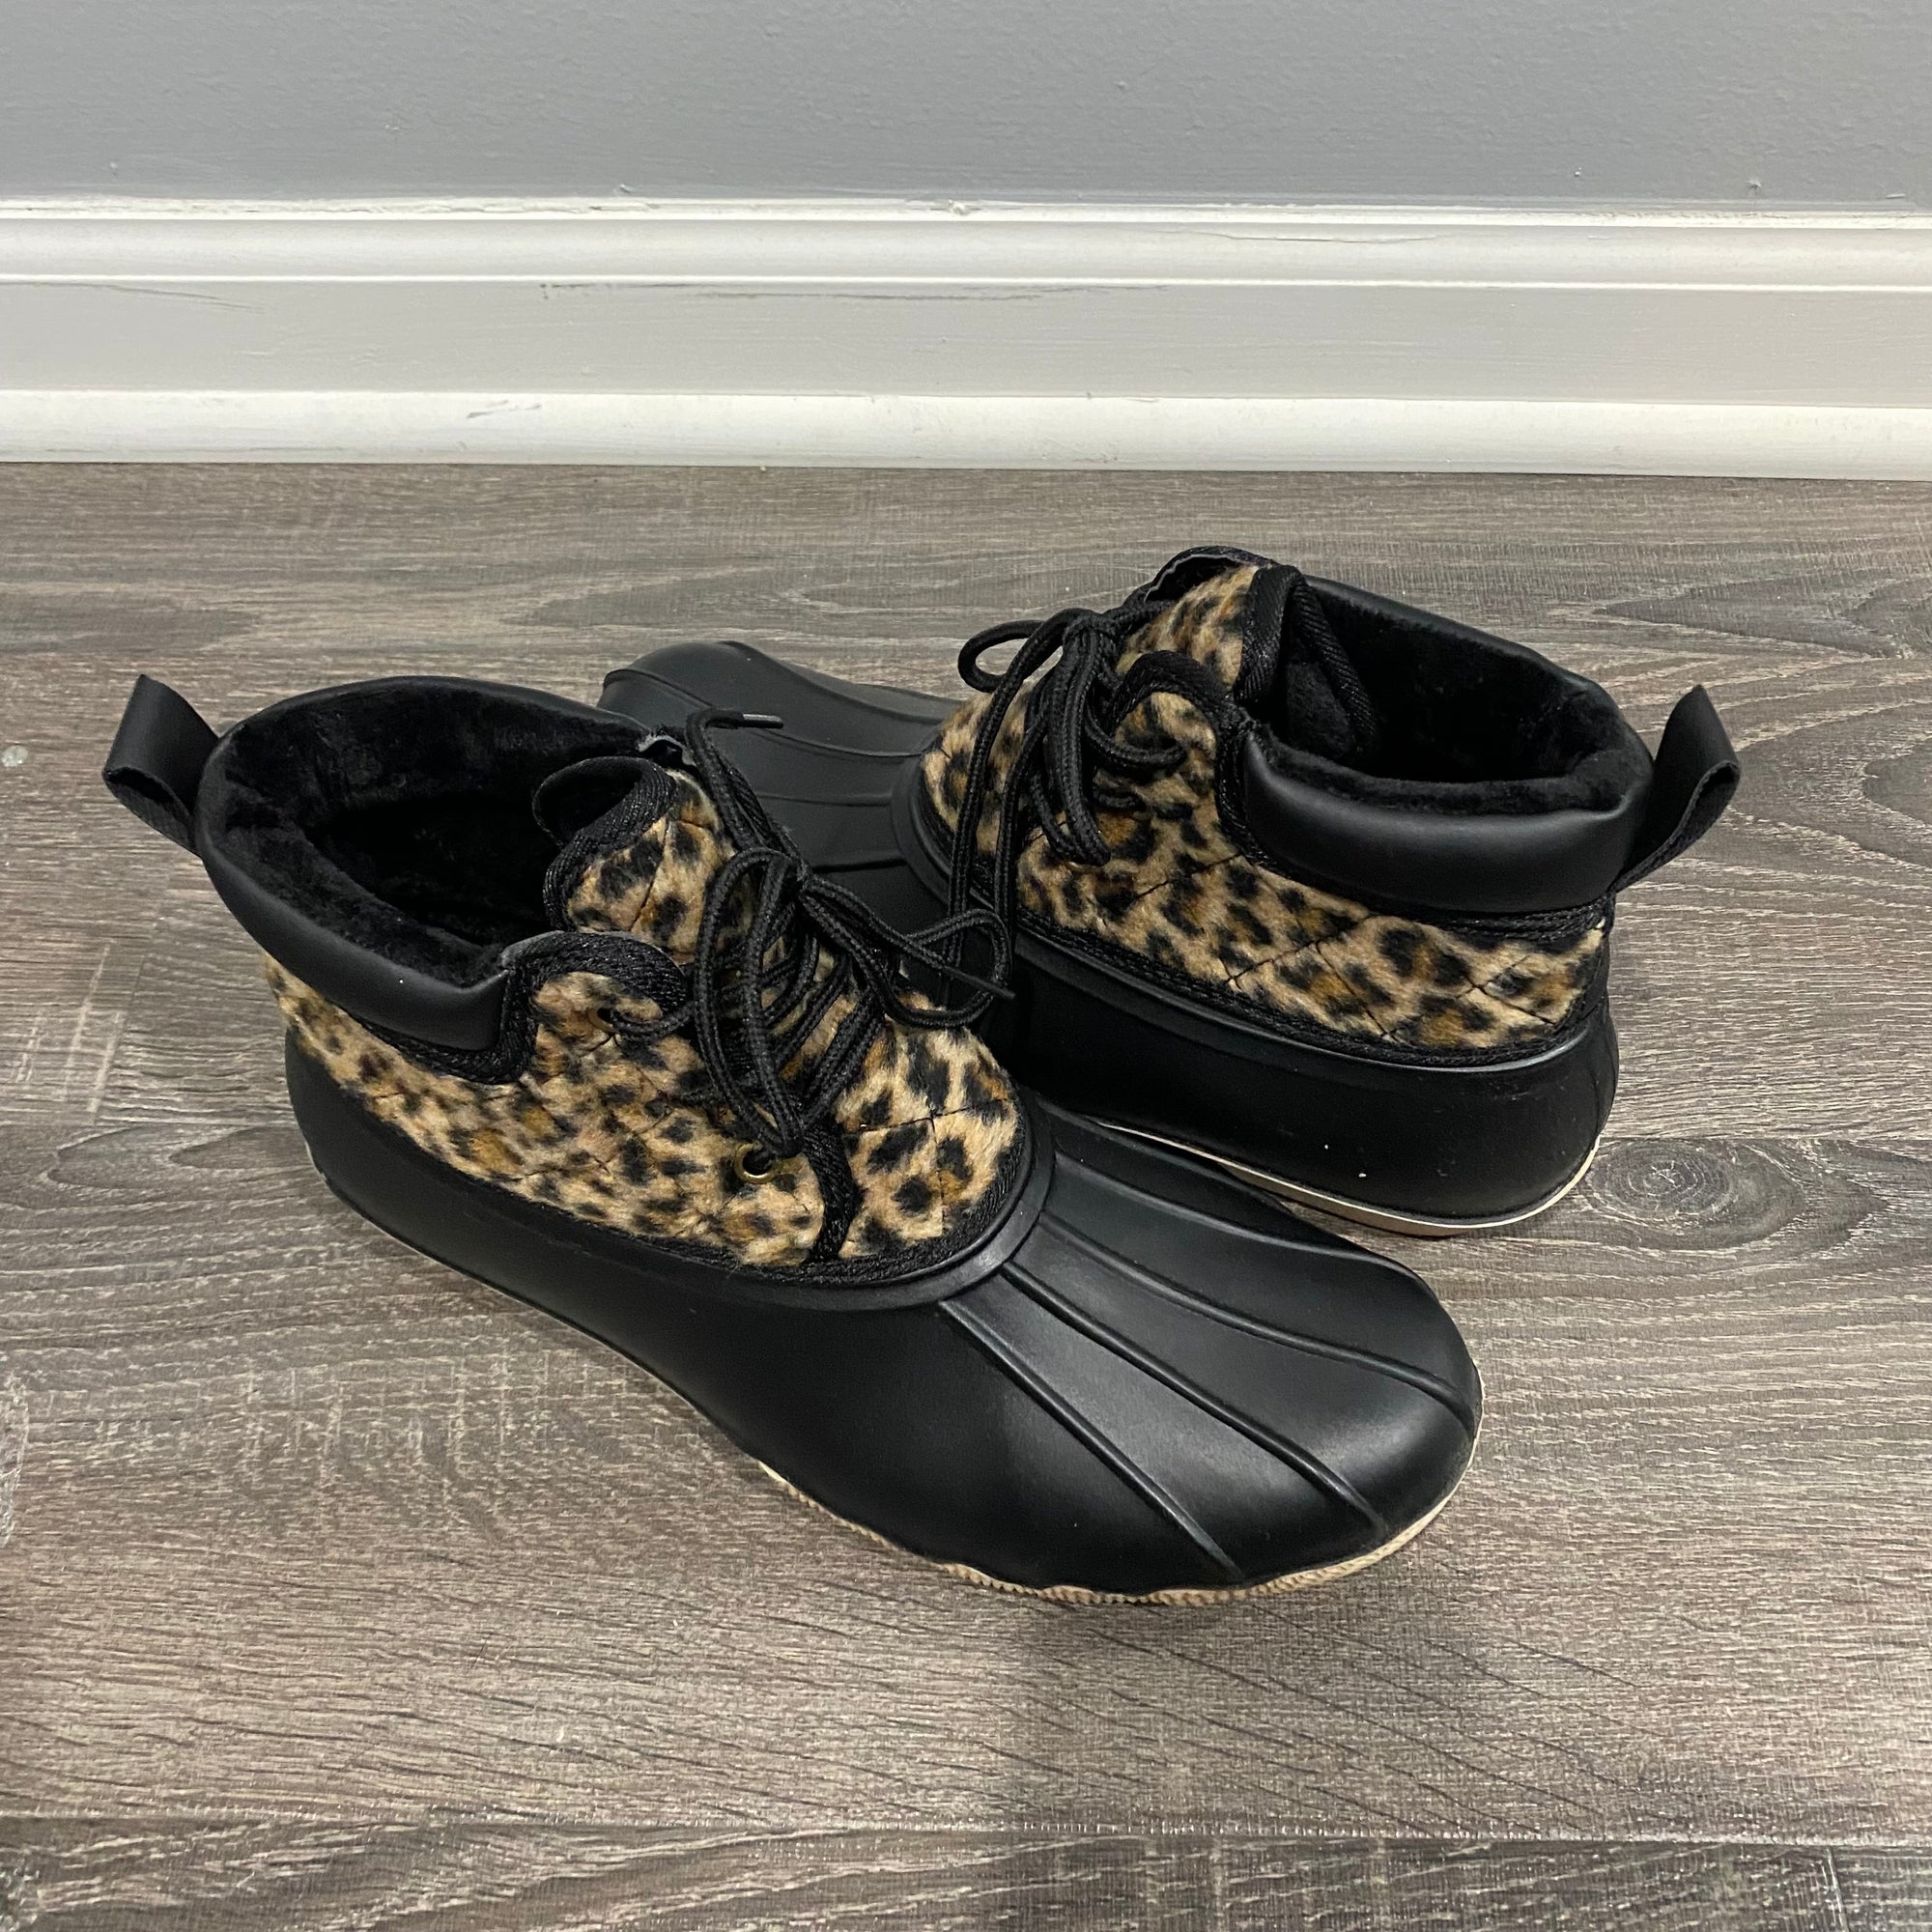 Gypsy Jazz Duck Boots - Leopard